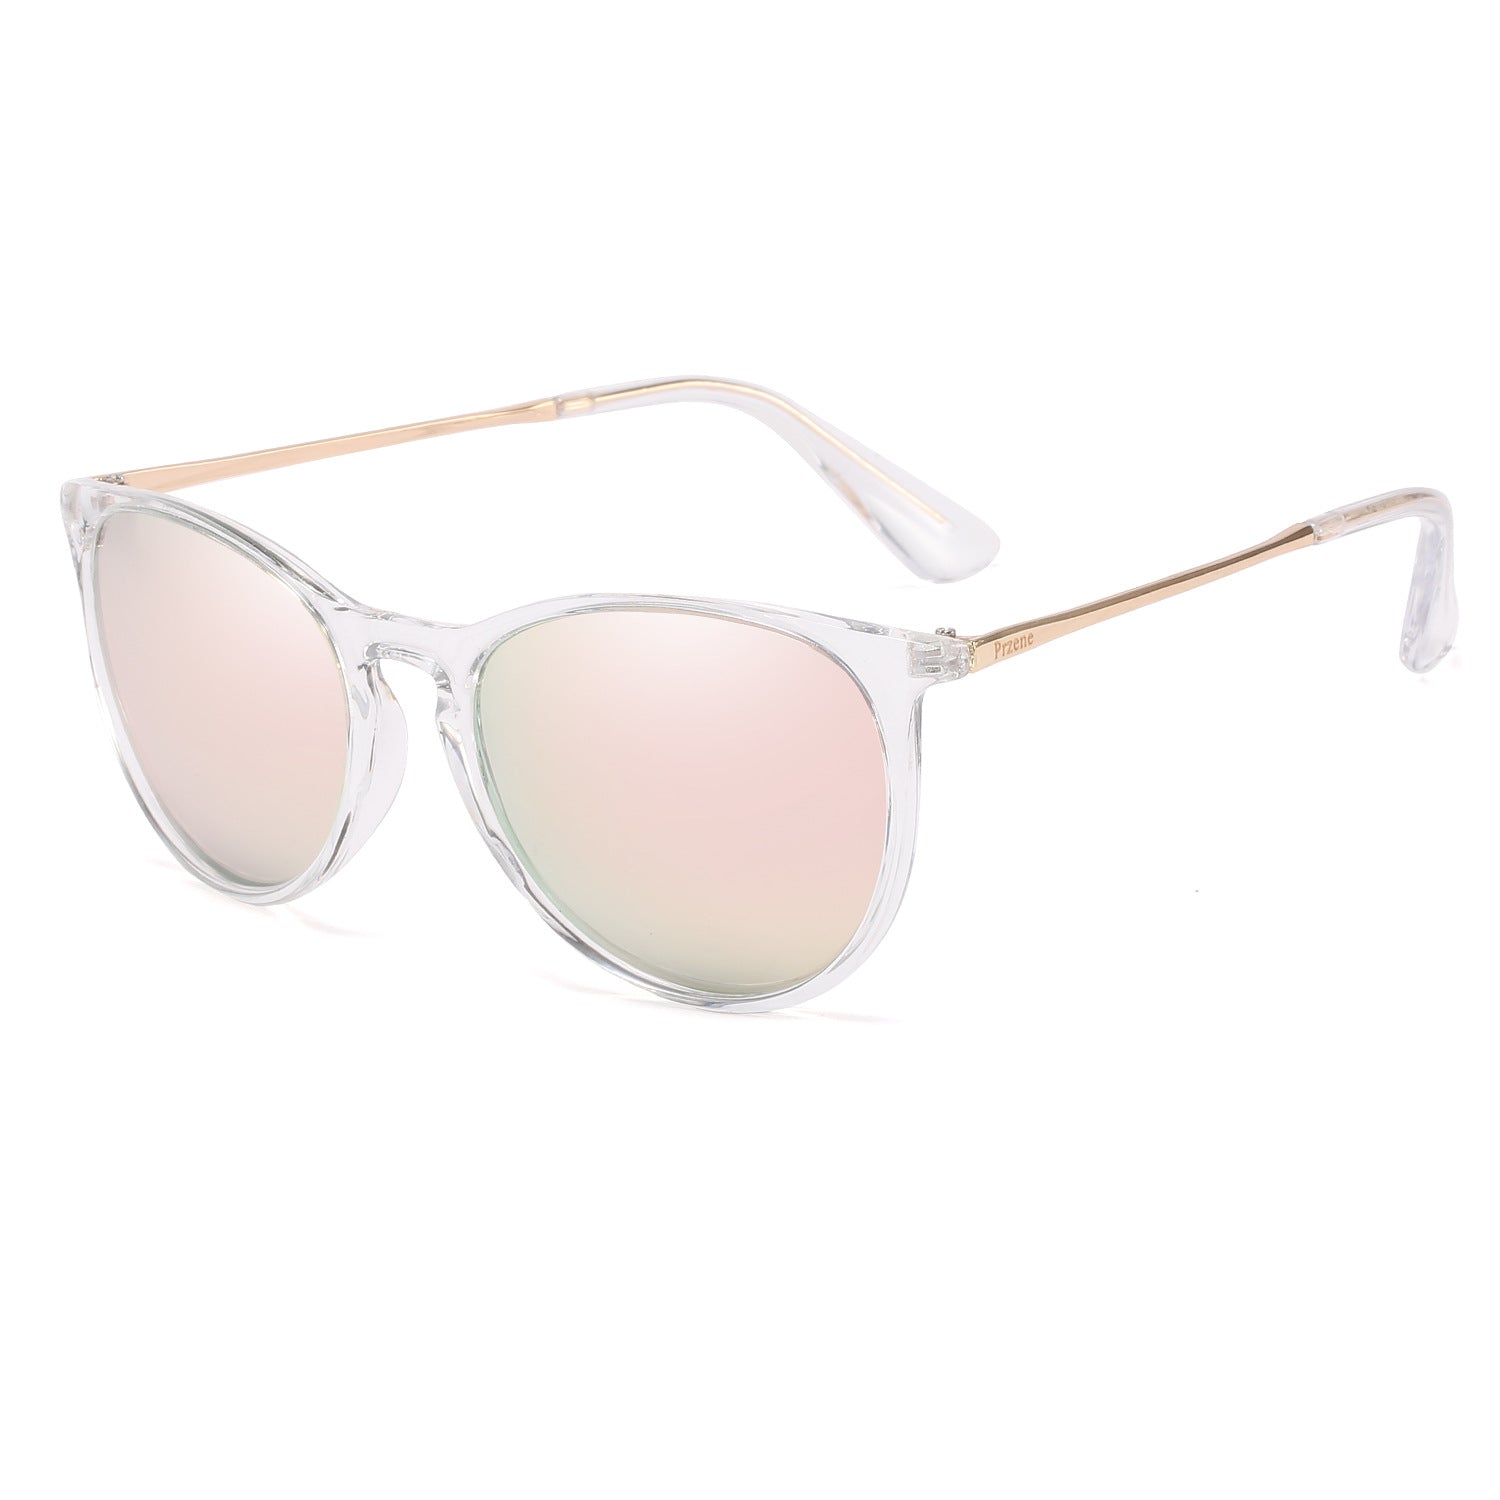 Fashion Metal Color Film Polarized Sunglasses Women apparel & accessories